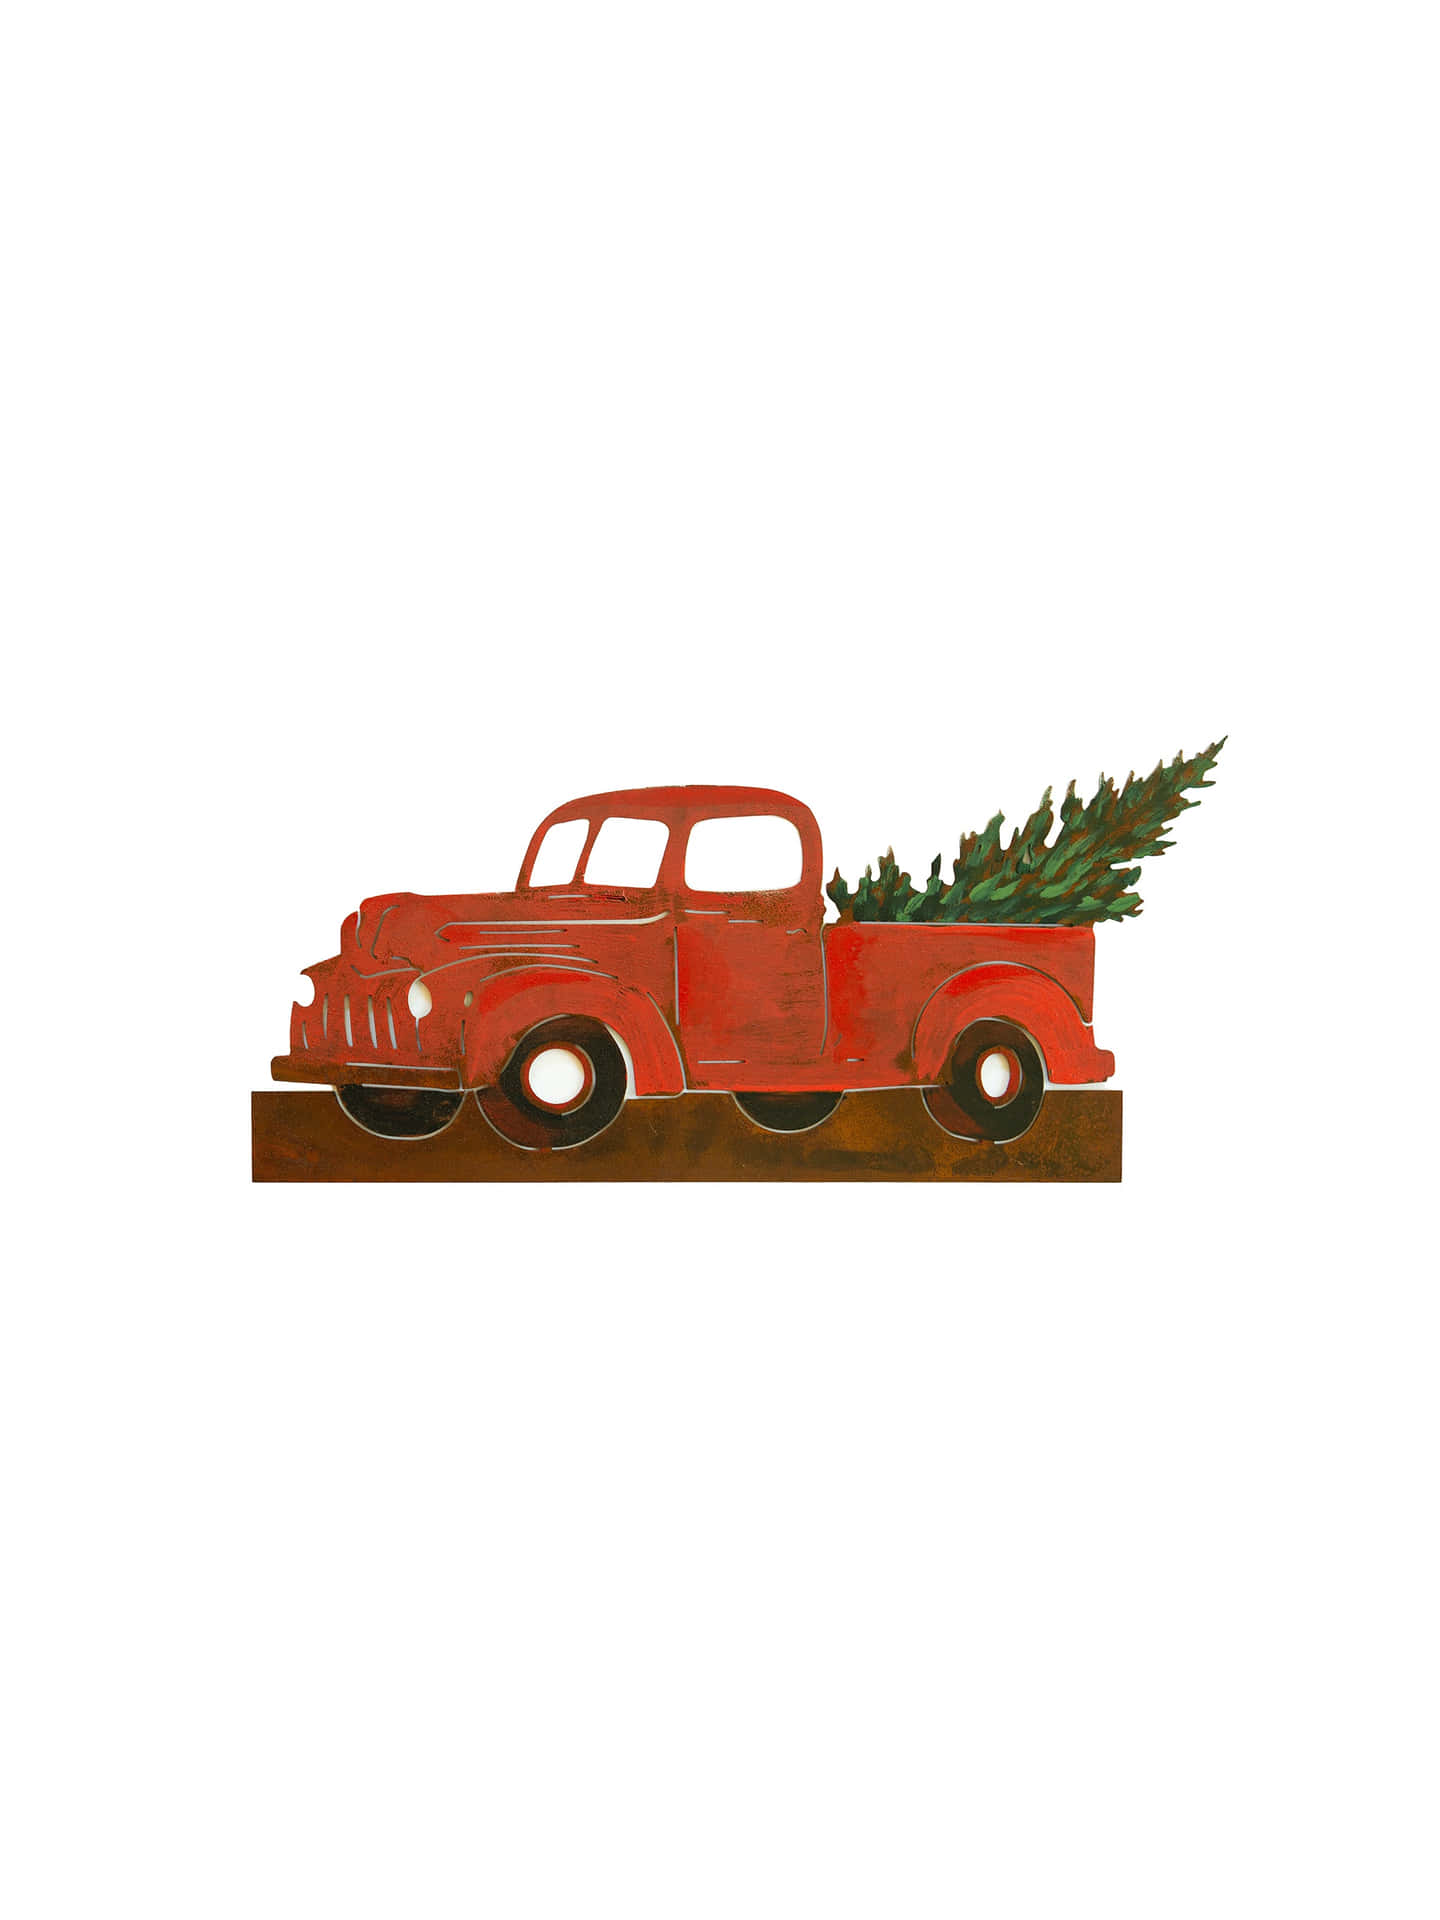 Celebrala Temporada Navideña Con Este Fondo De Pantalla De Un Camión Vintage De Navidad. Fondo de pantalla